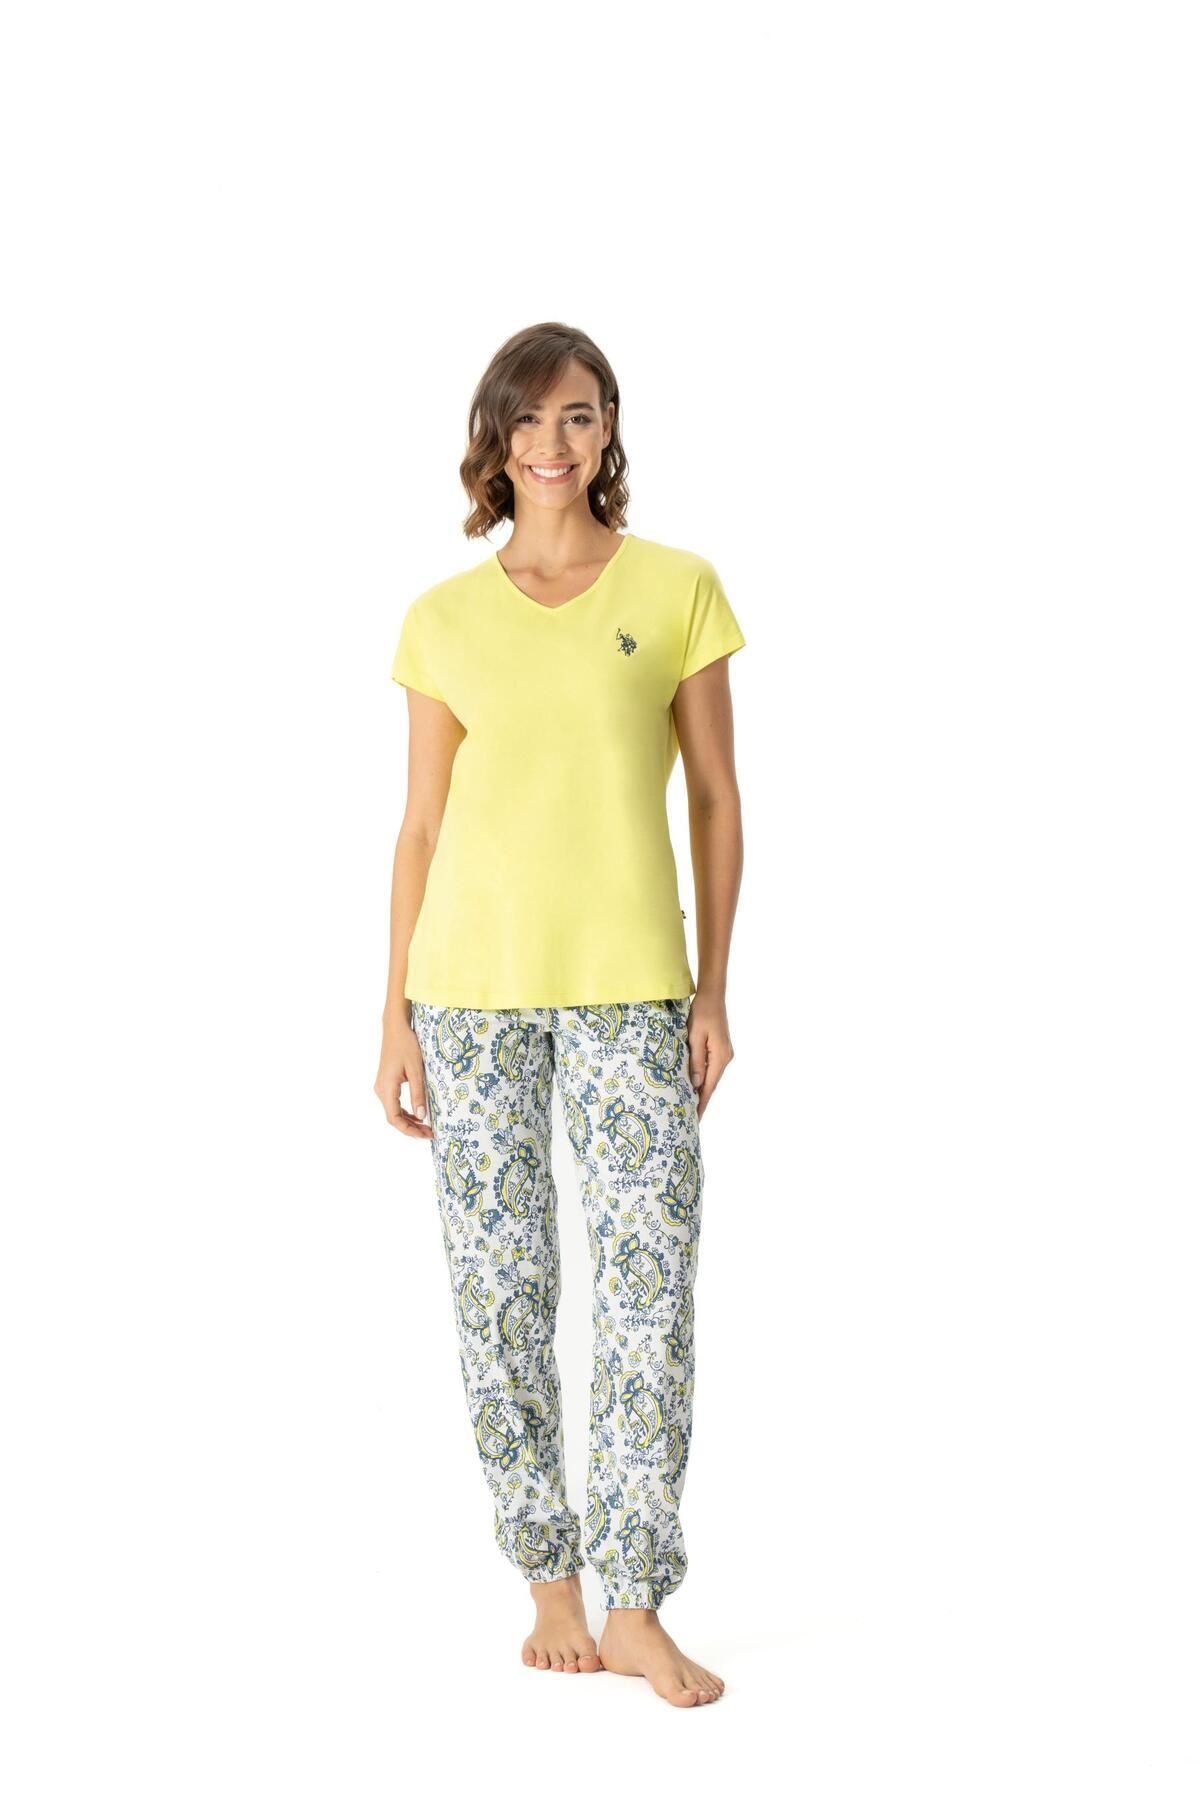 U.S. Polo Assn. U.S. Polo Assn. Kadın Neon Sarı V Yaka Pijama Takımı